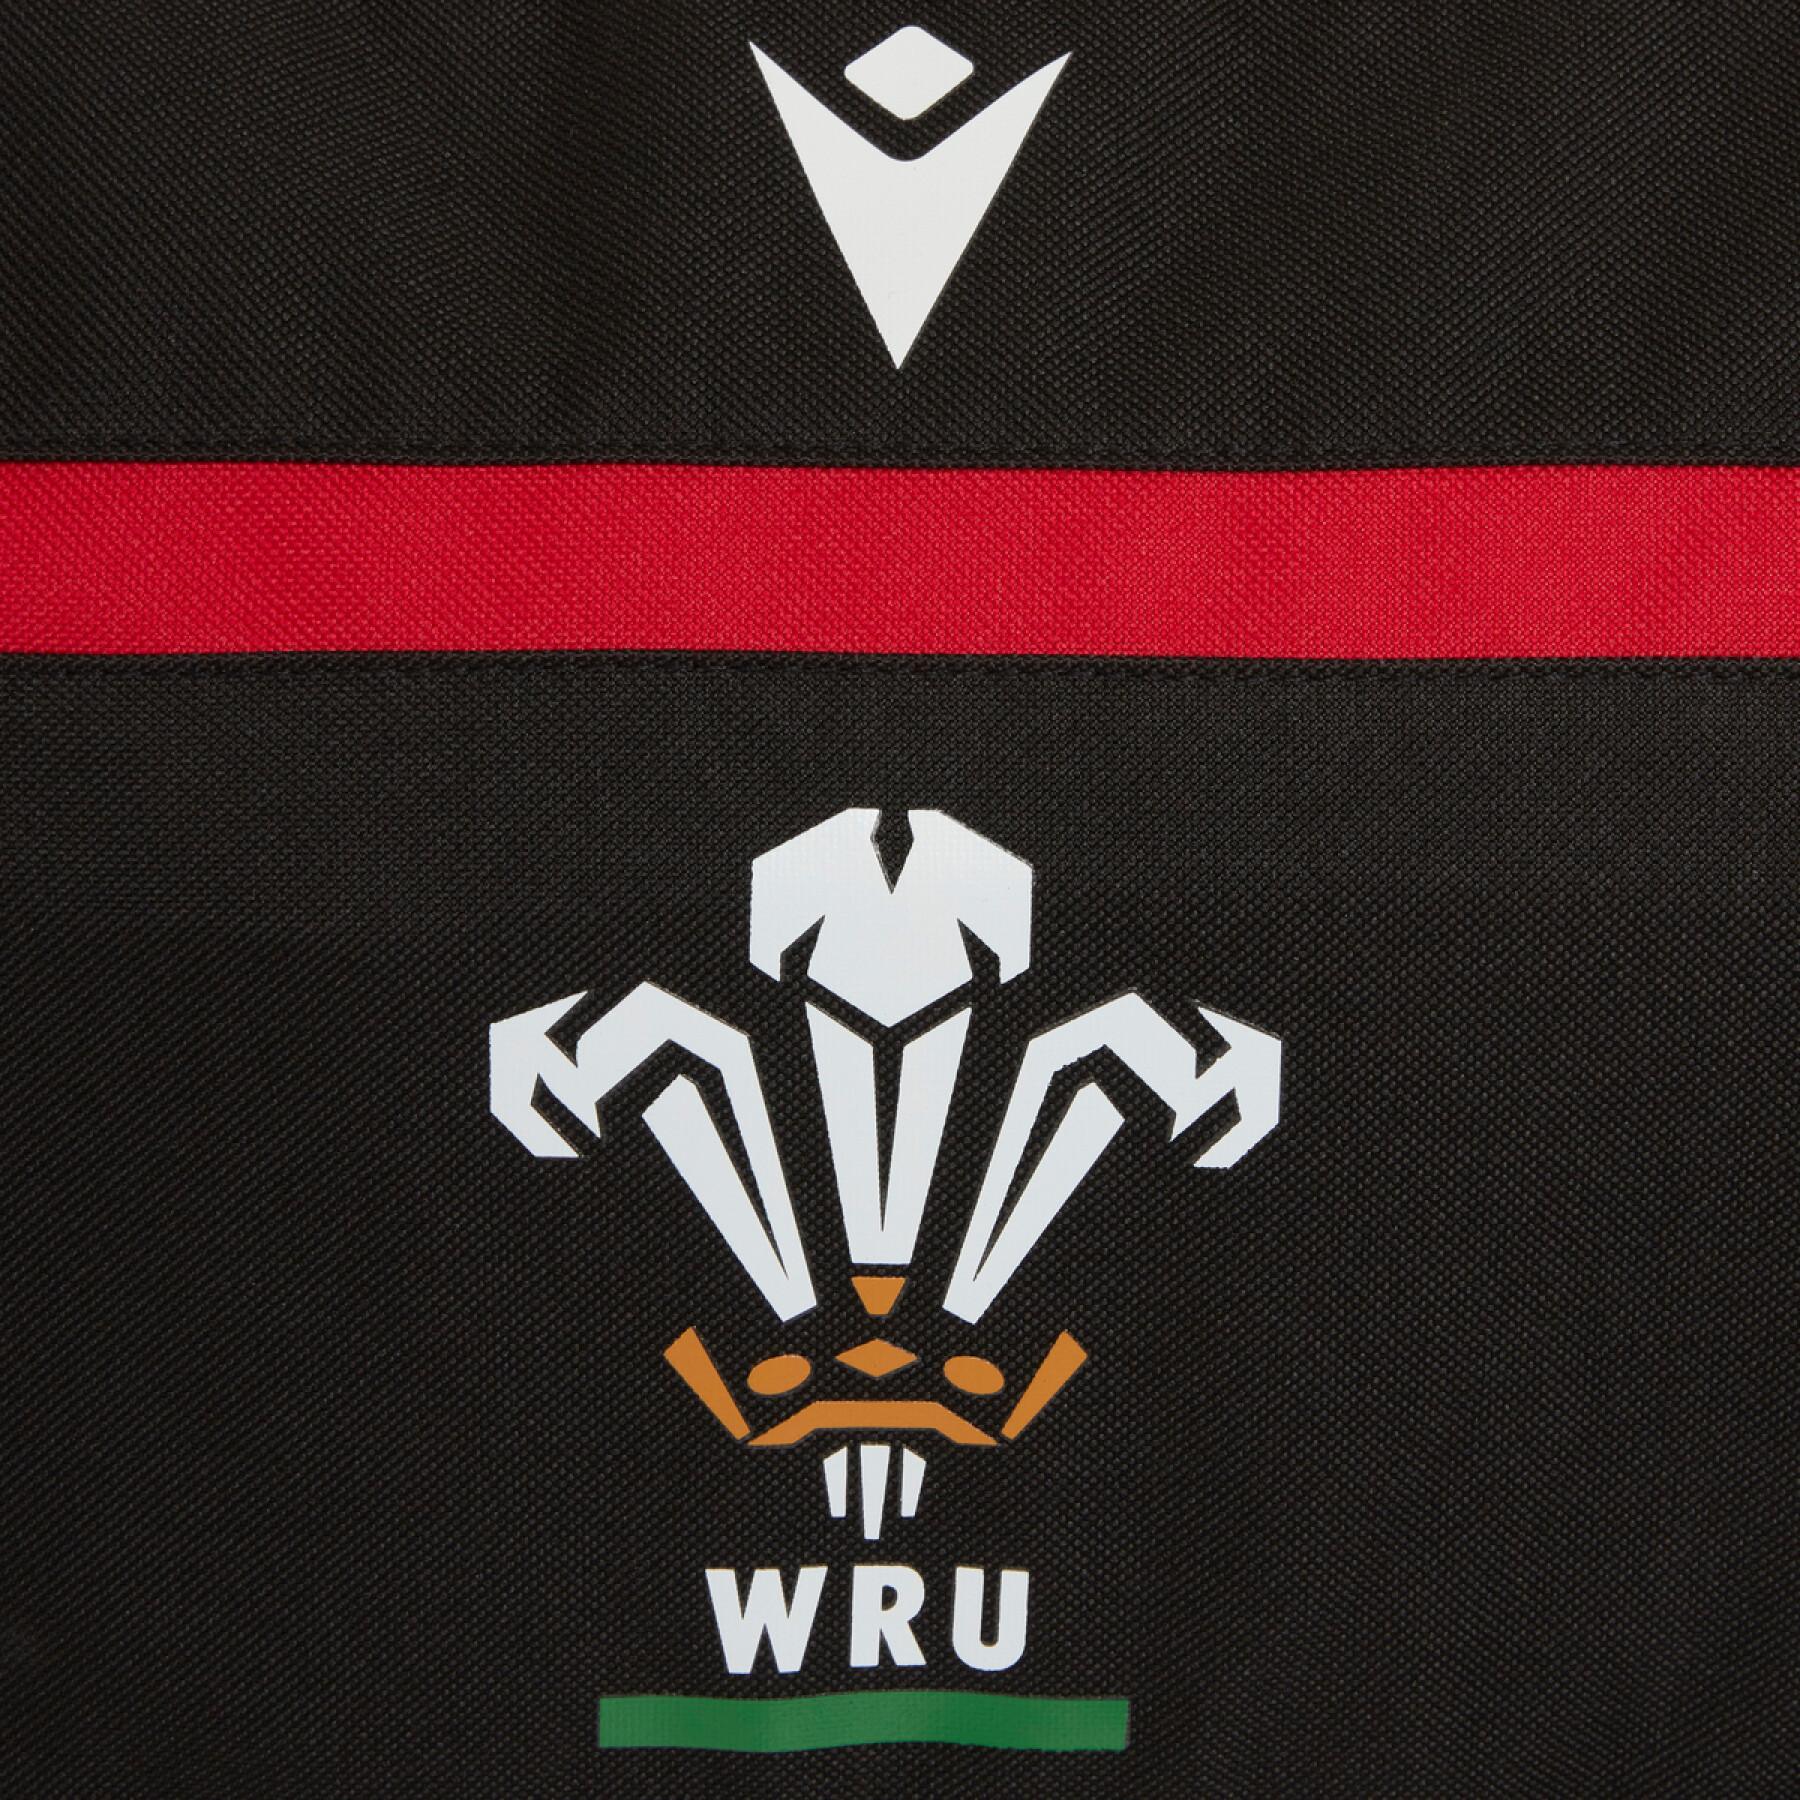 Sporttas Pays de Galles rugby 2020/21